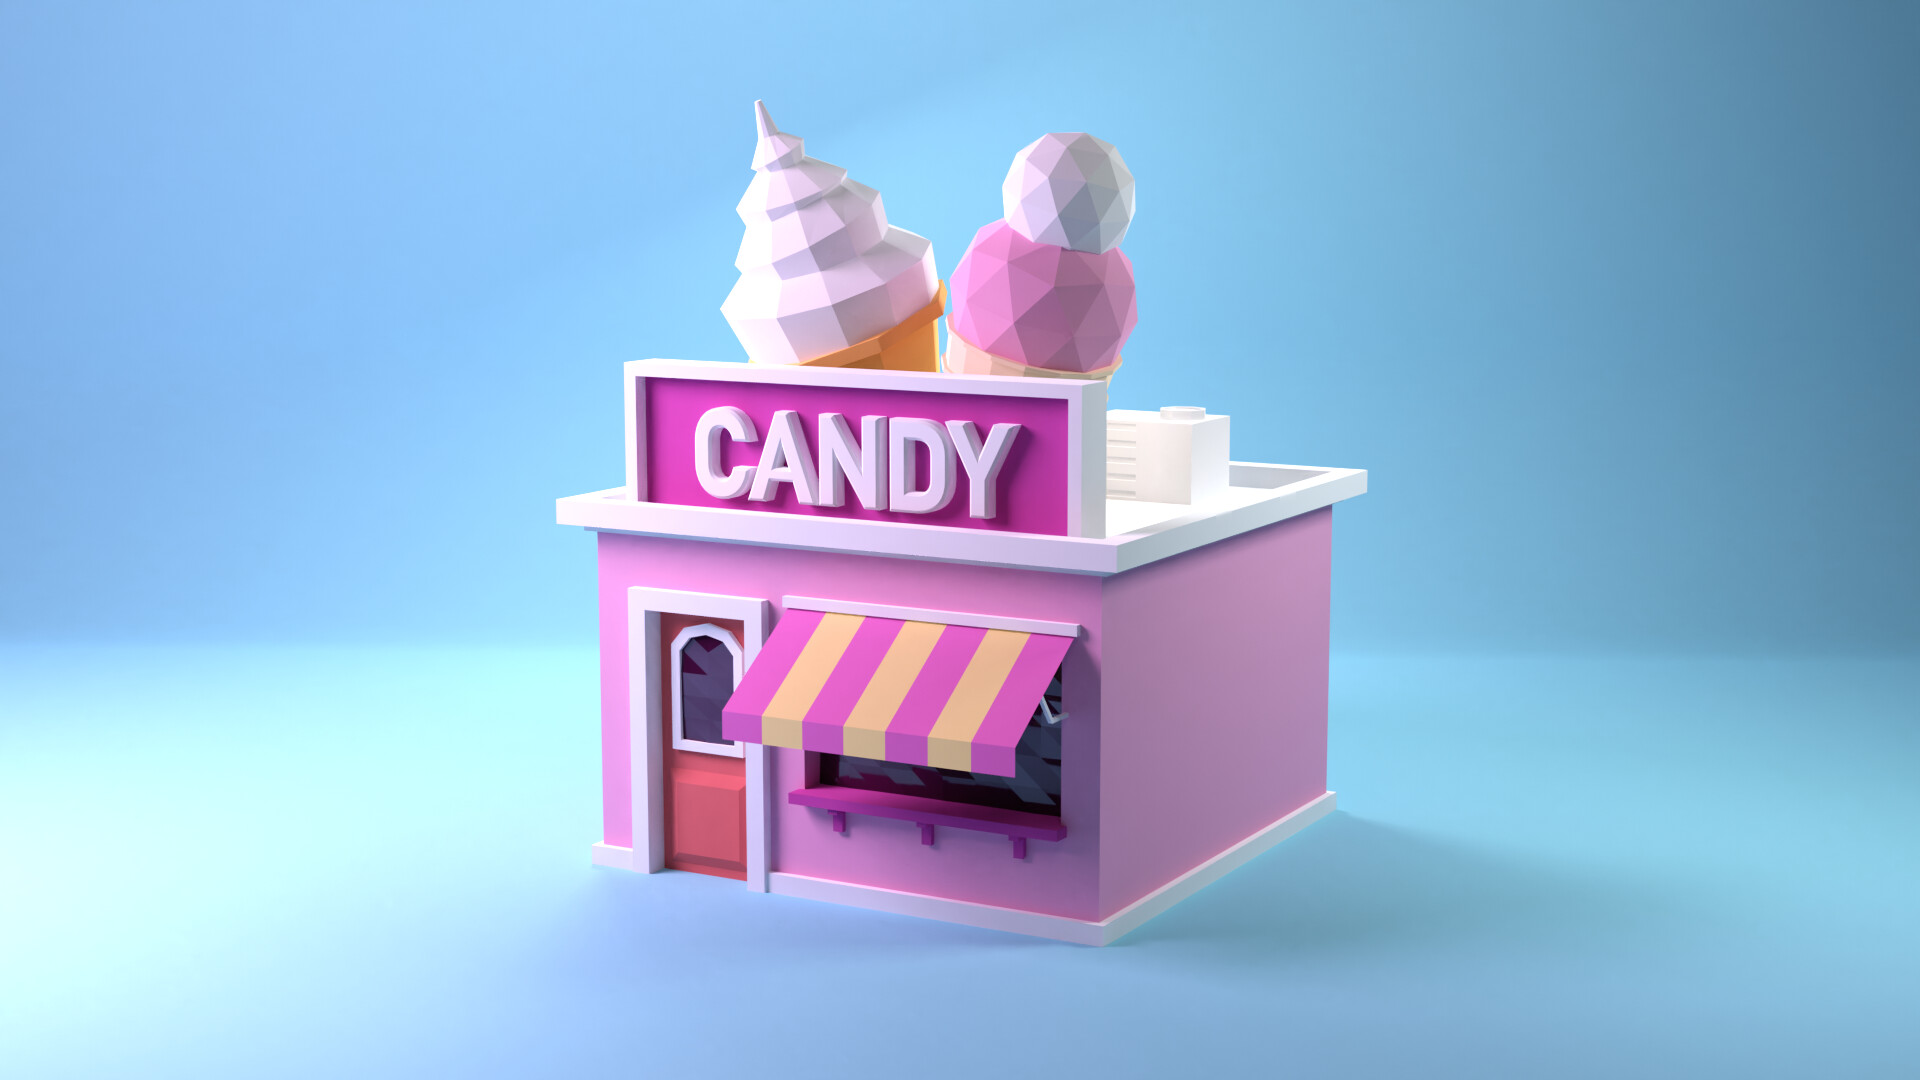 Candy shop junior charles. Candy shop. Candy shop 3d. Candy shop картинки. Магазин 3d арт.